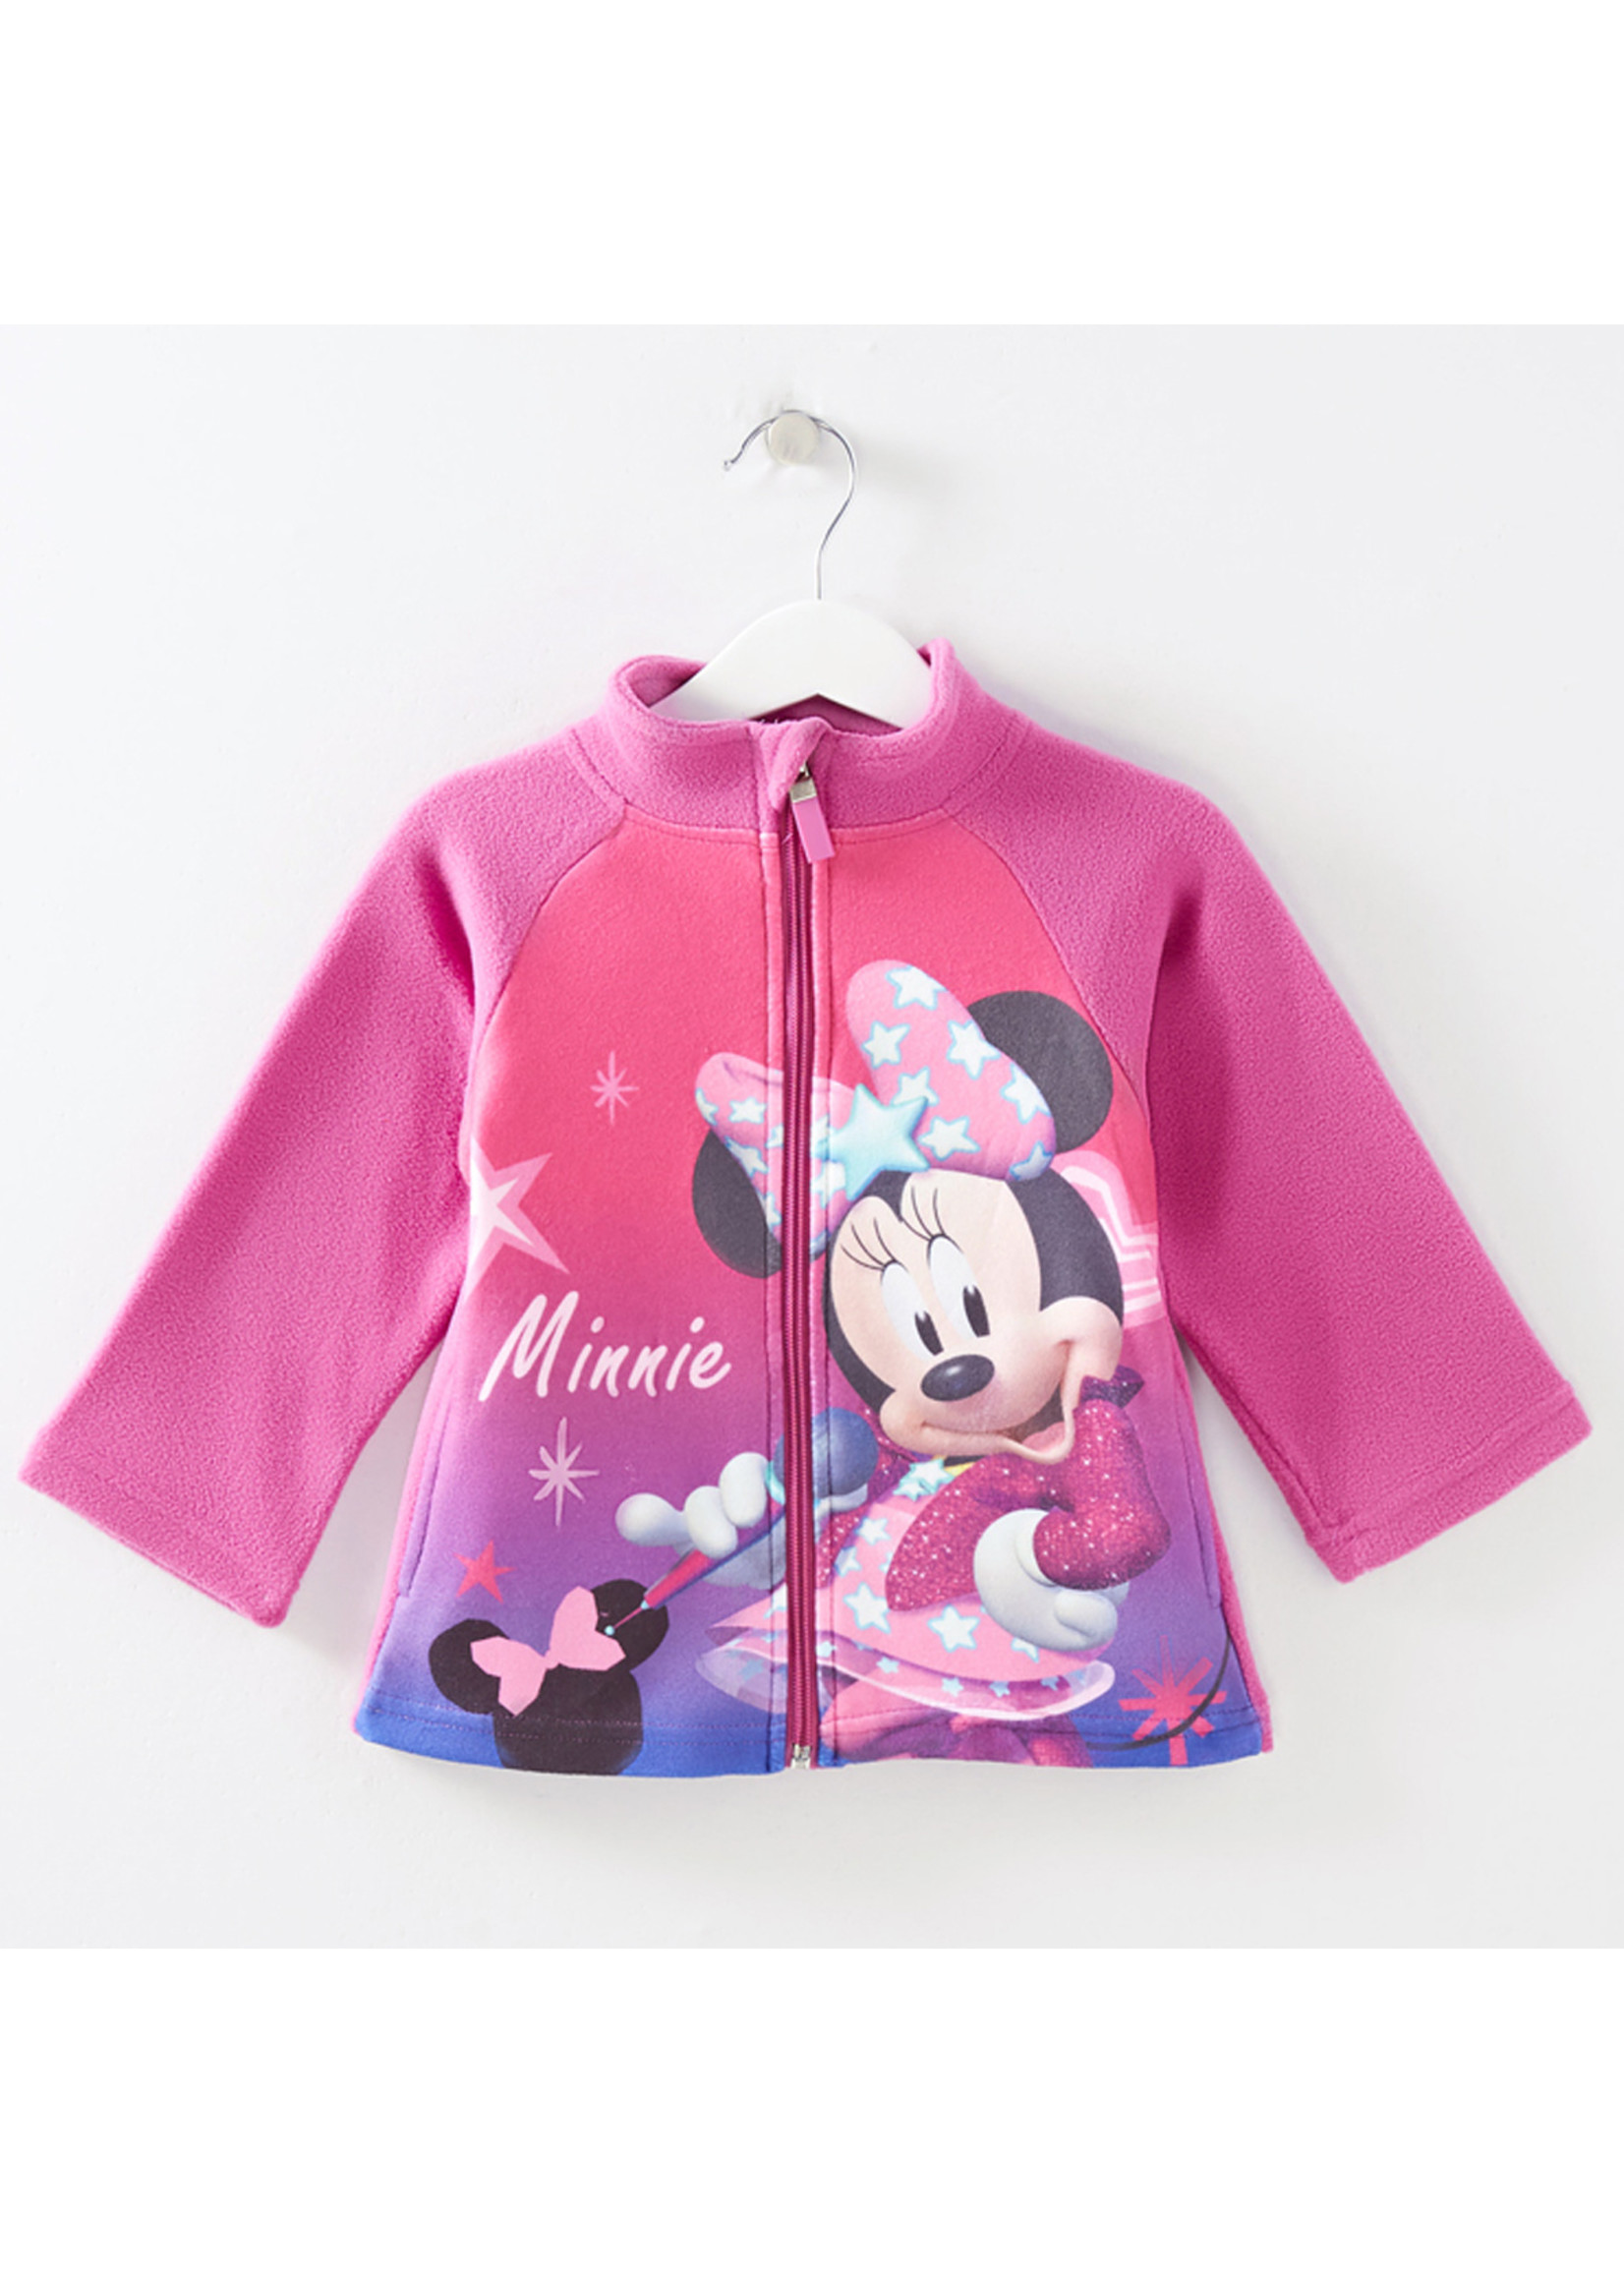 Disney junior Minnie Mouse fleece cardigan from Disney pink